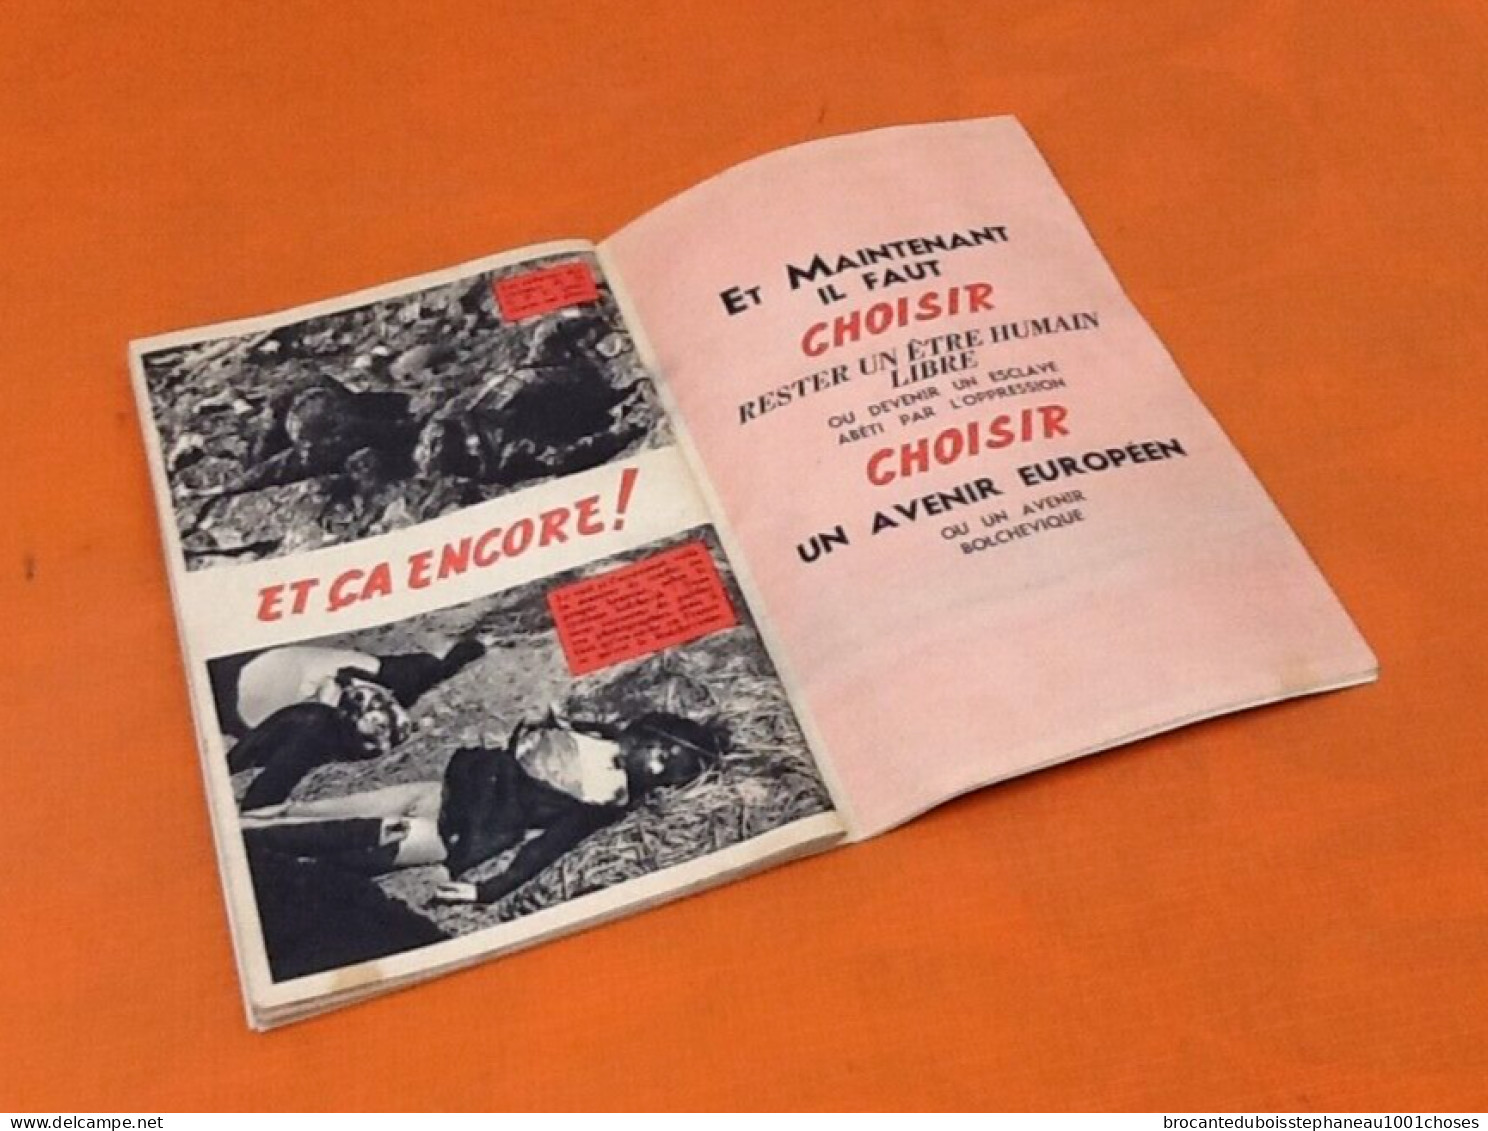 L' abcès bolchevique  Brochure de propagande (vers 1941)